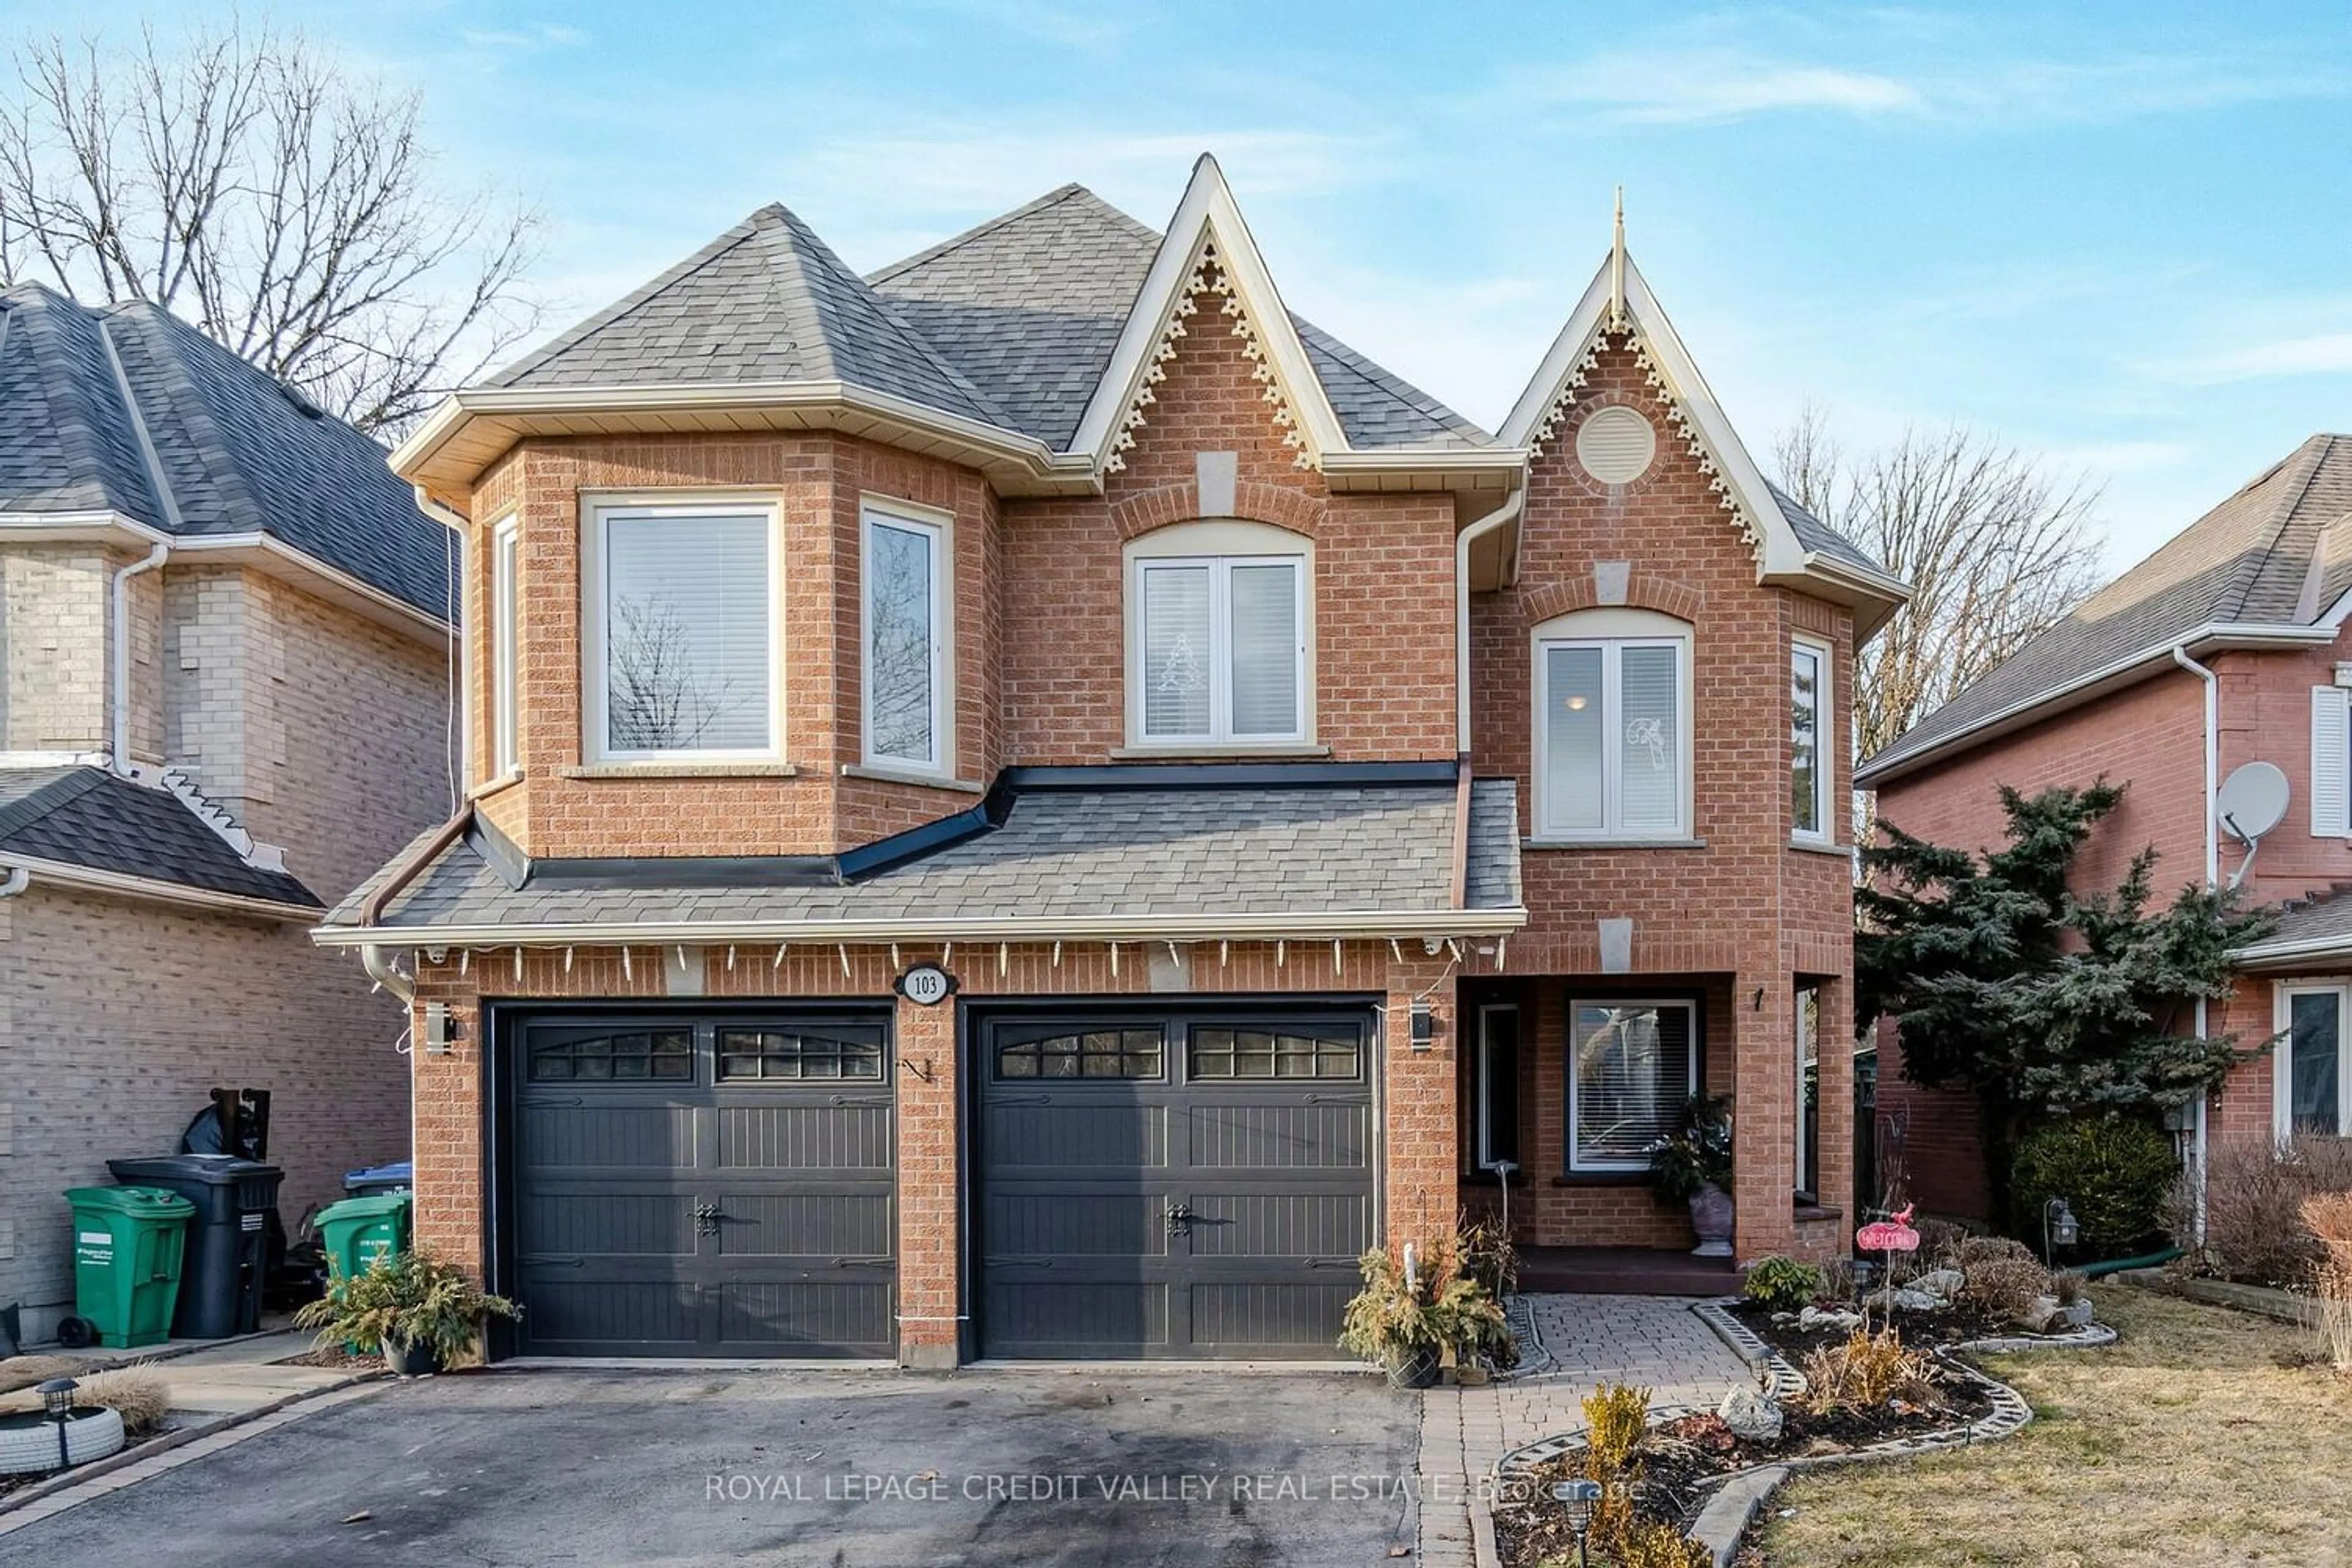 Home with brick exterior material for 103 Vivians Cres, Brampton Ontario L6Y 4V4